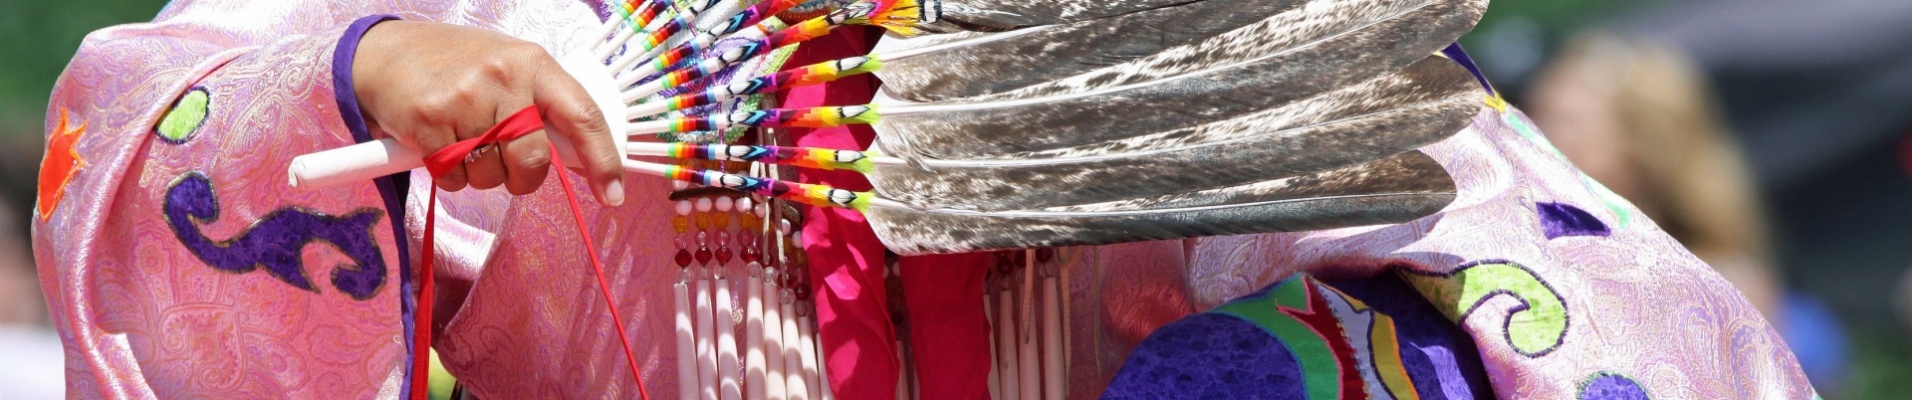 amerindienne-dansant-tenue-traditionnelle-pow-wow-canada